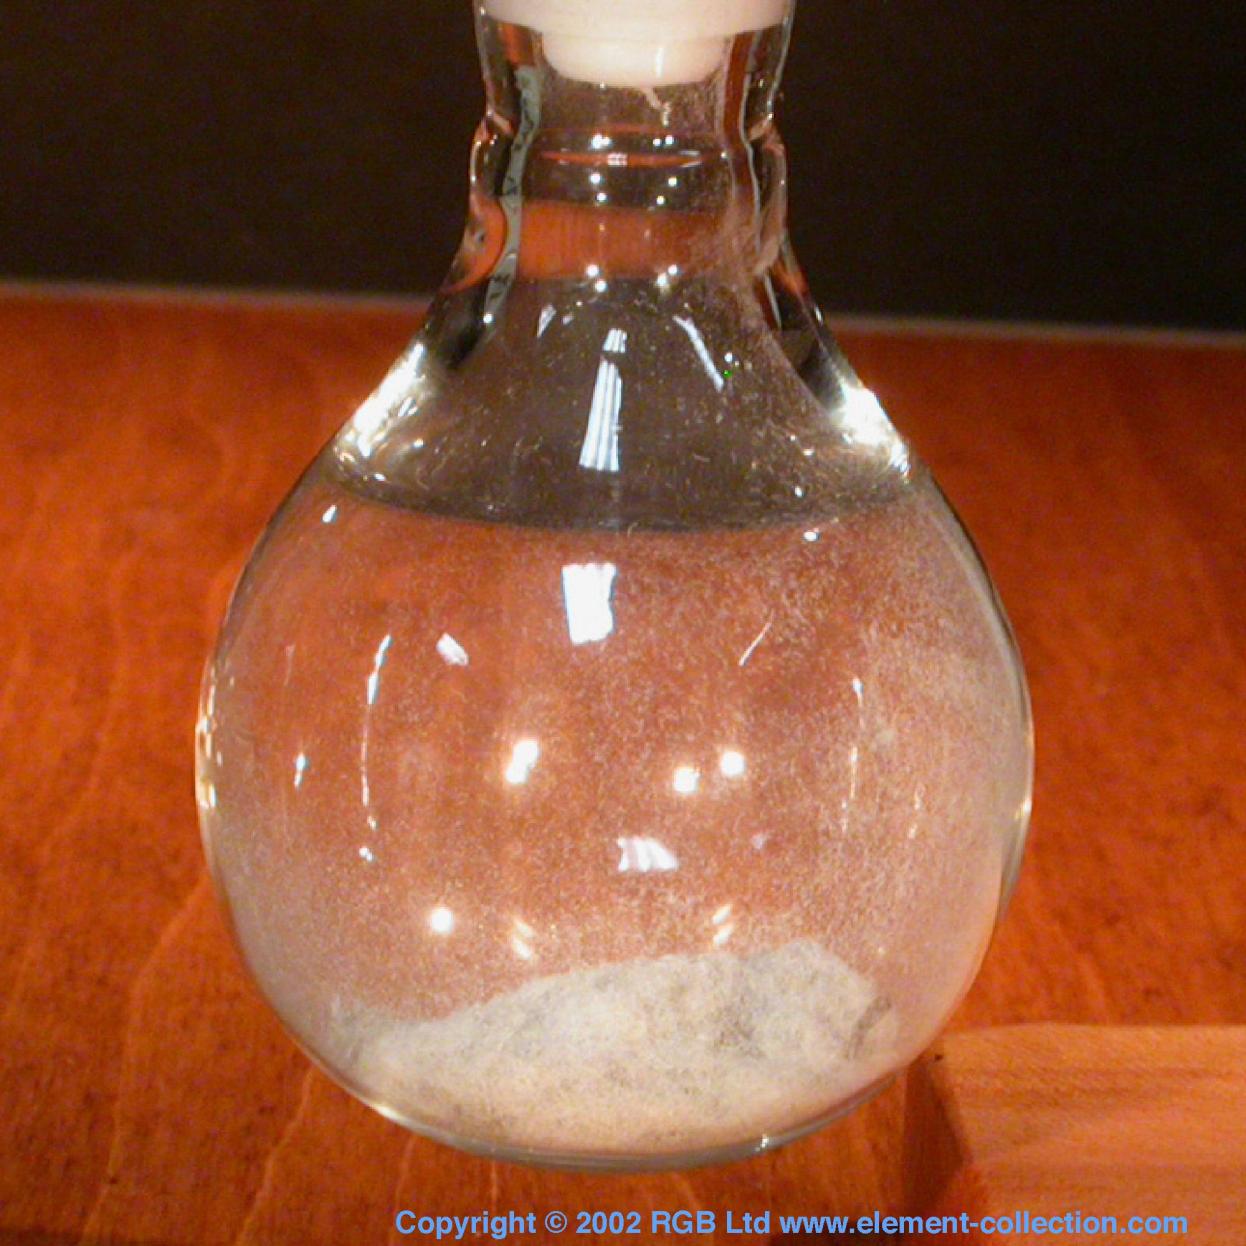 Radon Flask containing thorium oxide